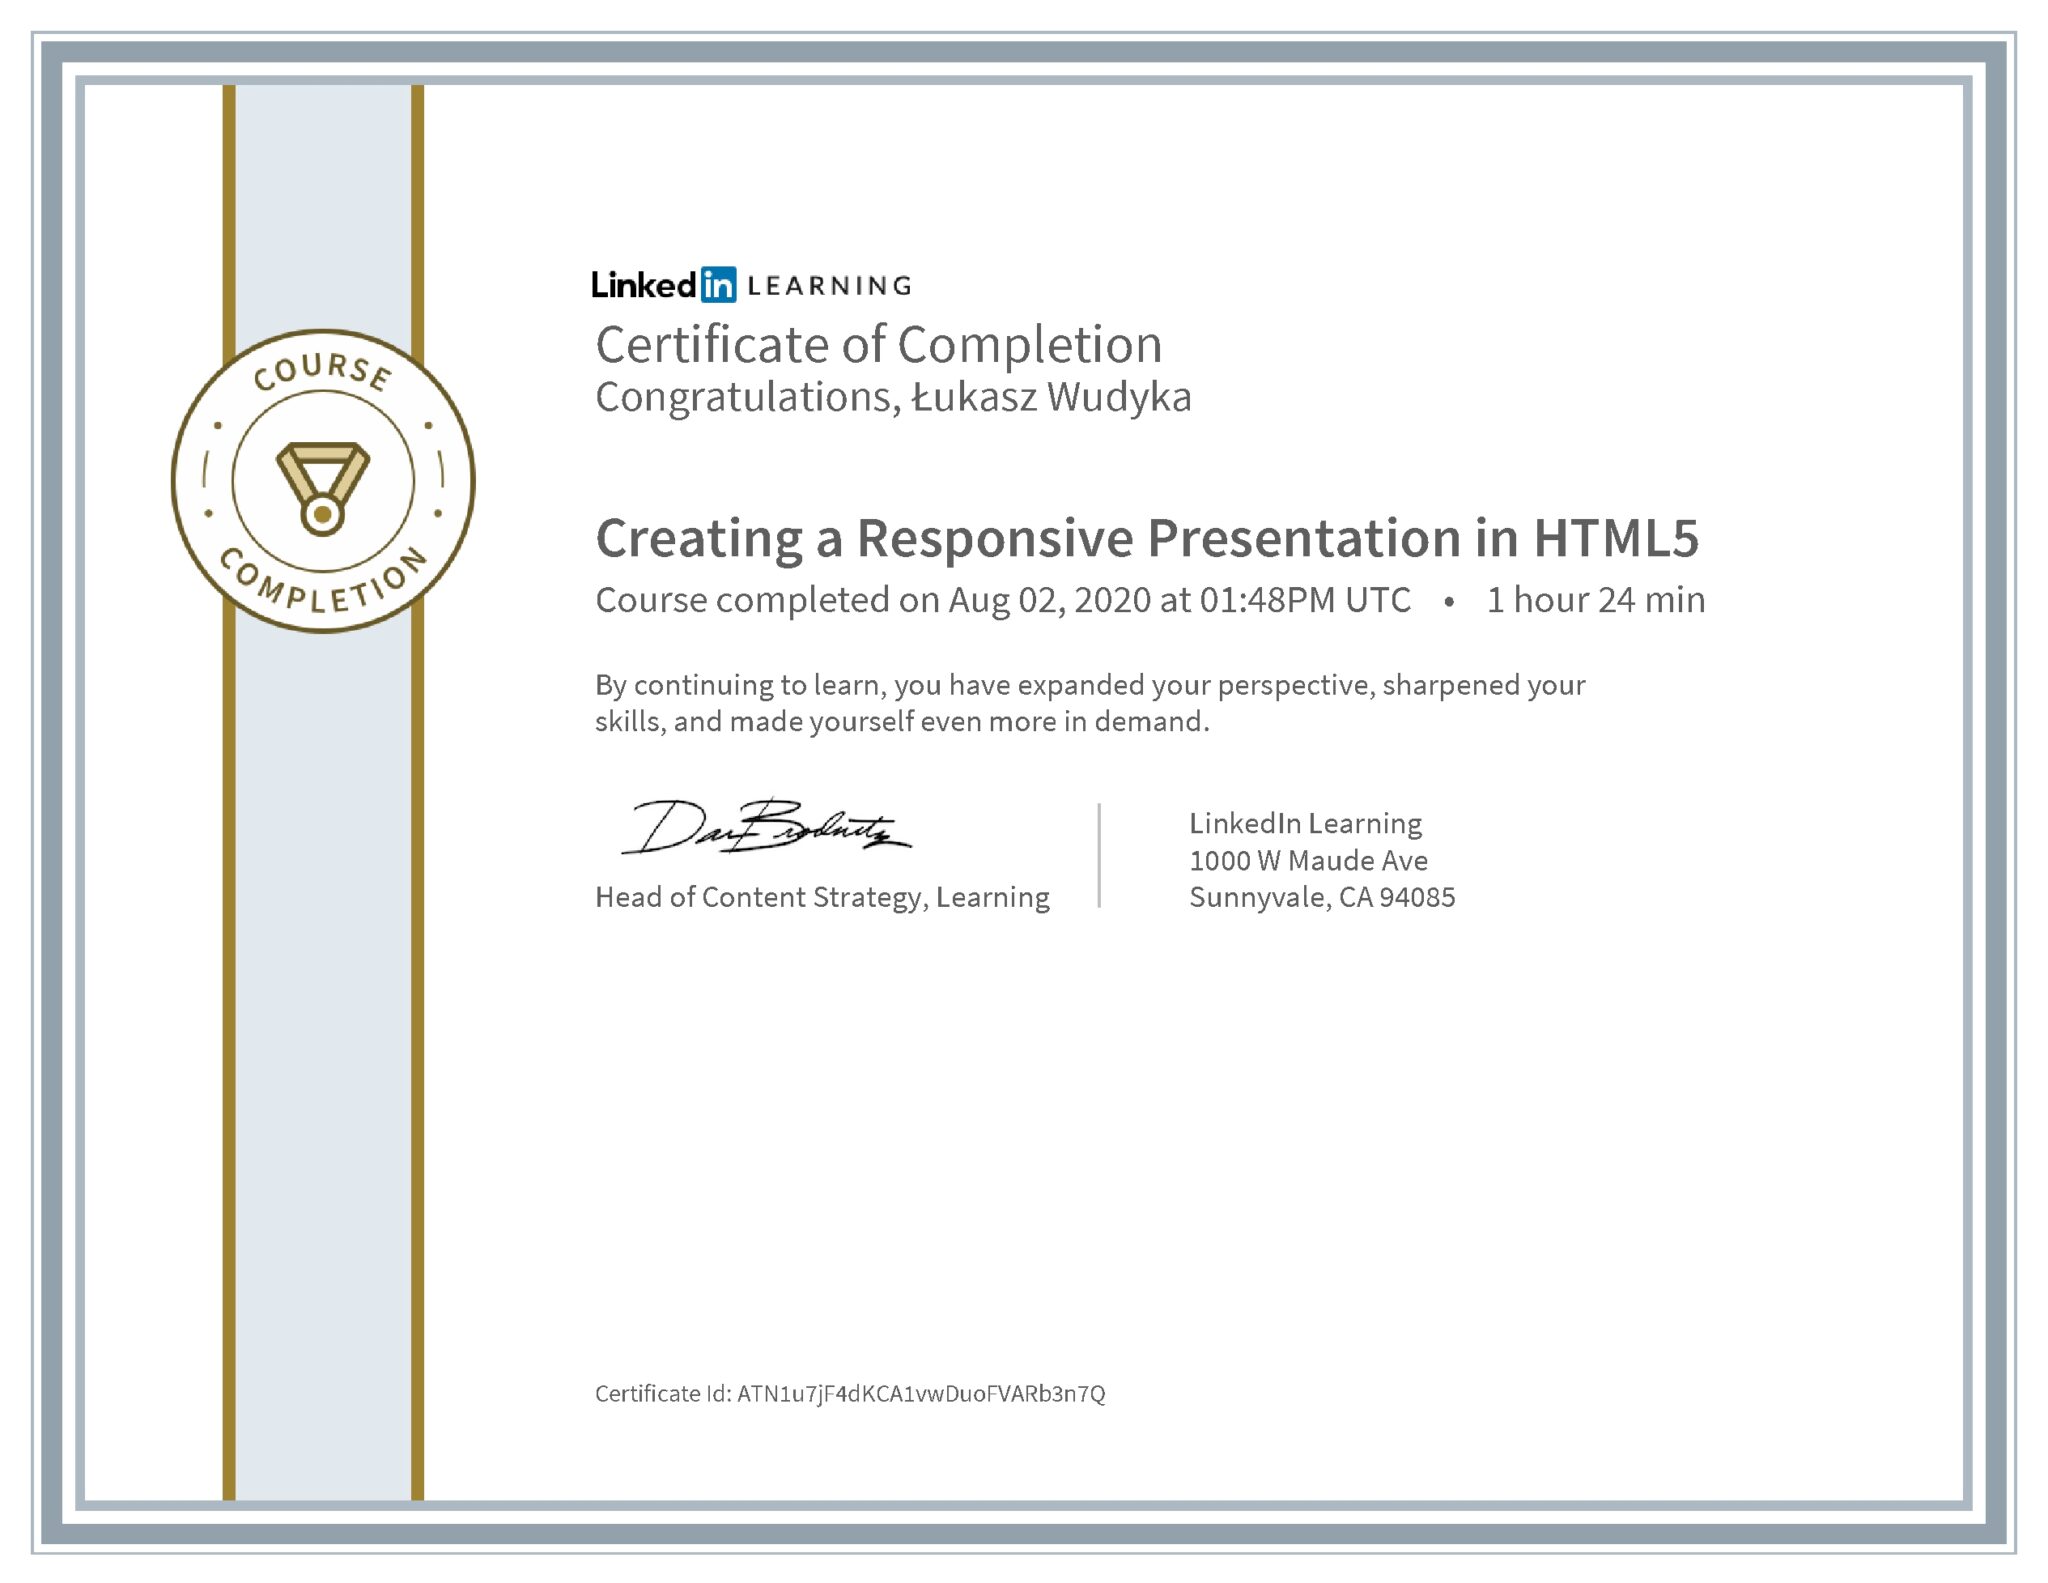 Łukasz Wudyka certyfikat LinkedIn Creating a Responsive Presentation in HTML5